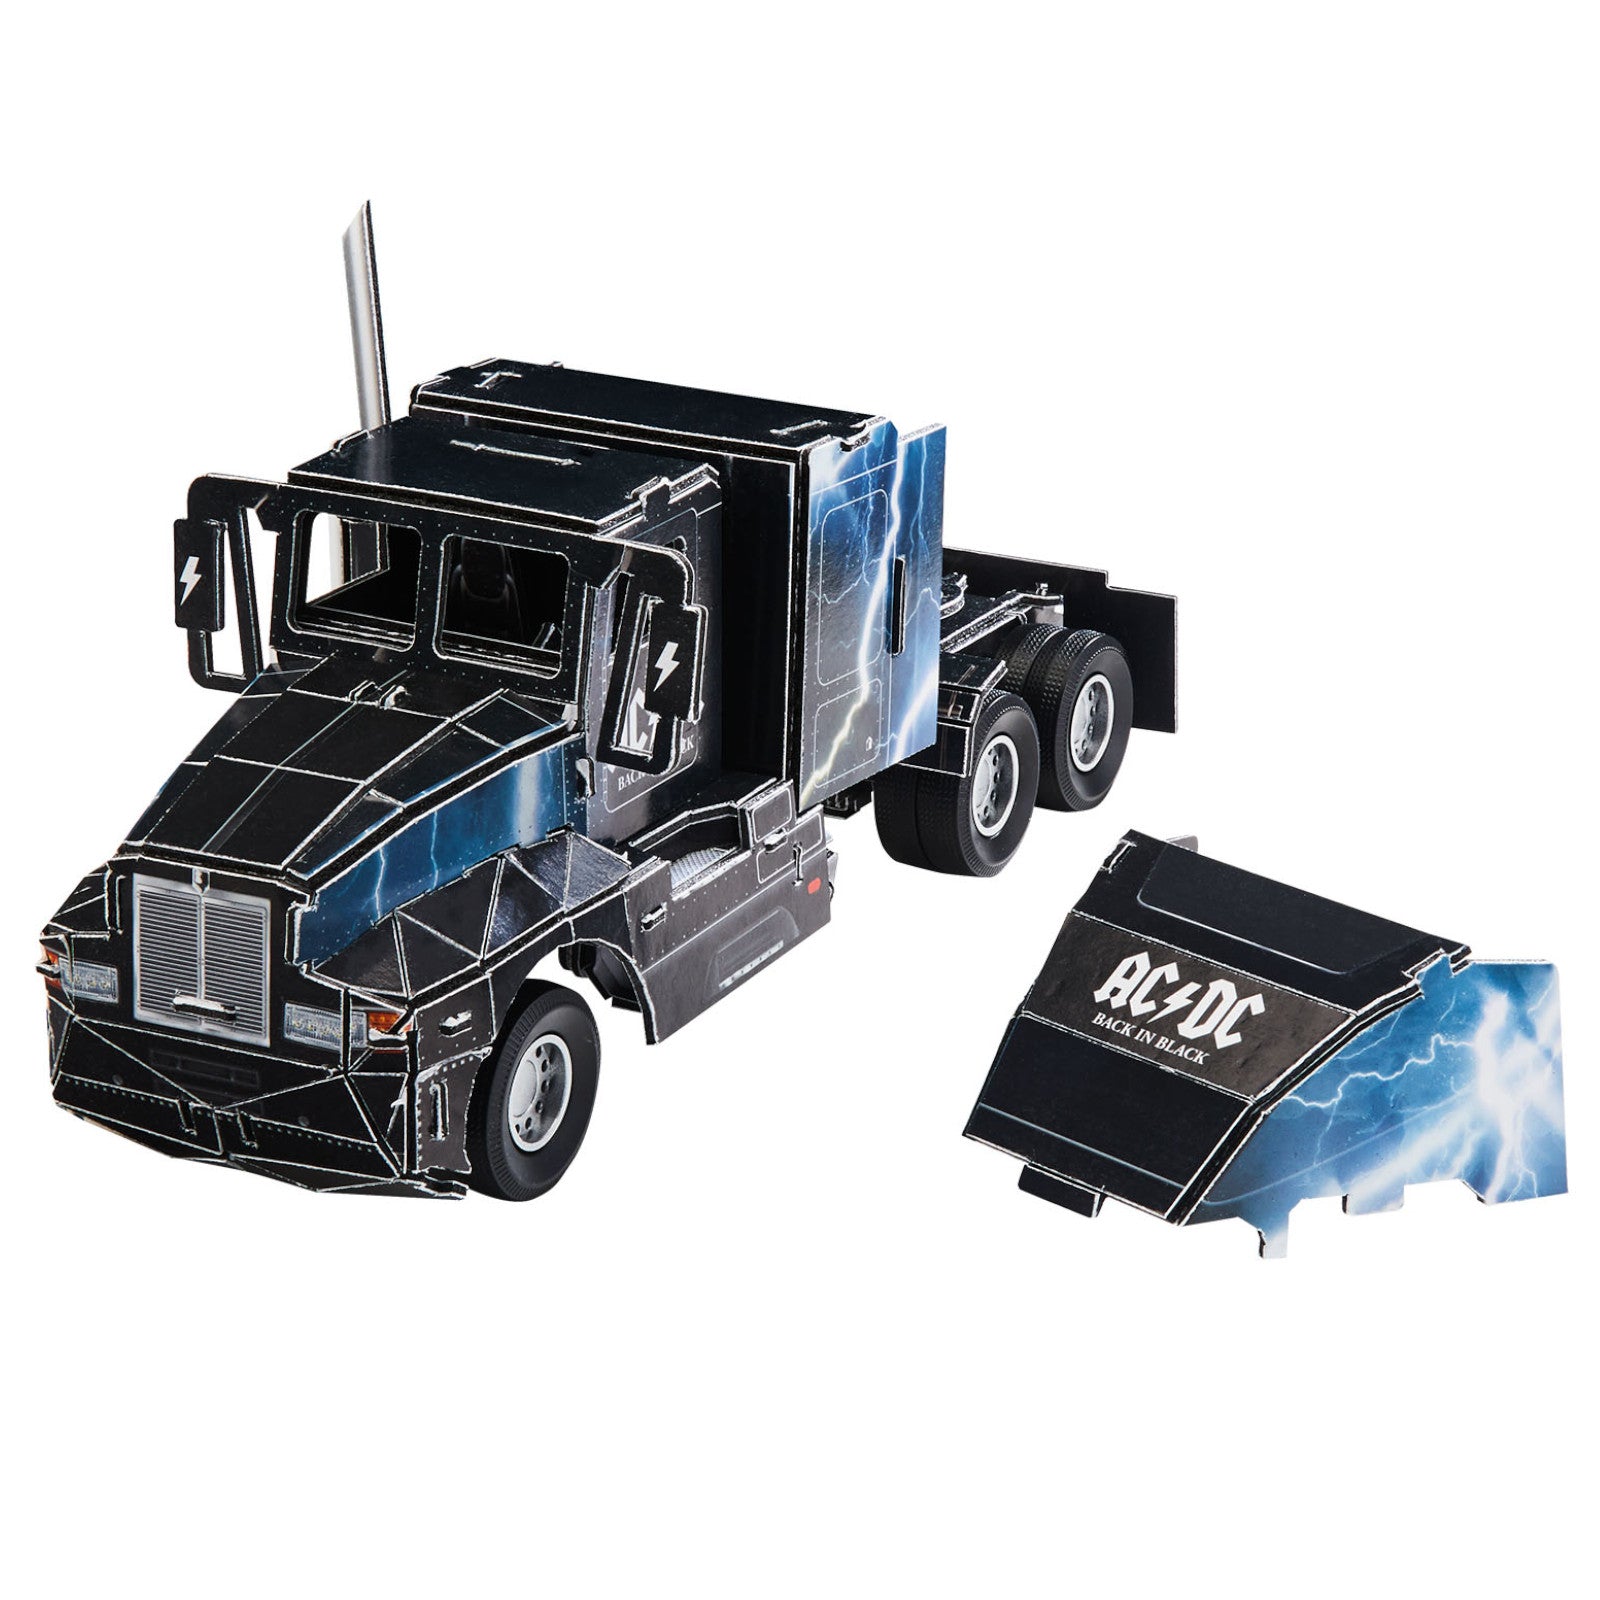 AC/DC Tour Truck 3D Puzzle Revell Model Kit